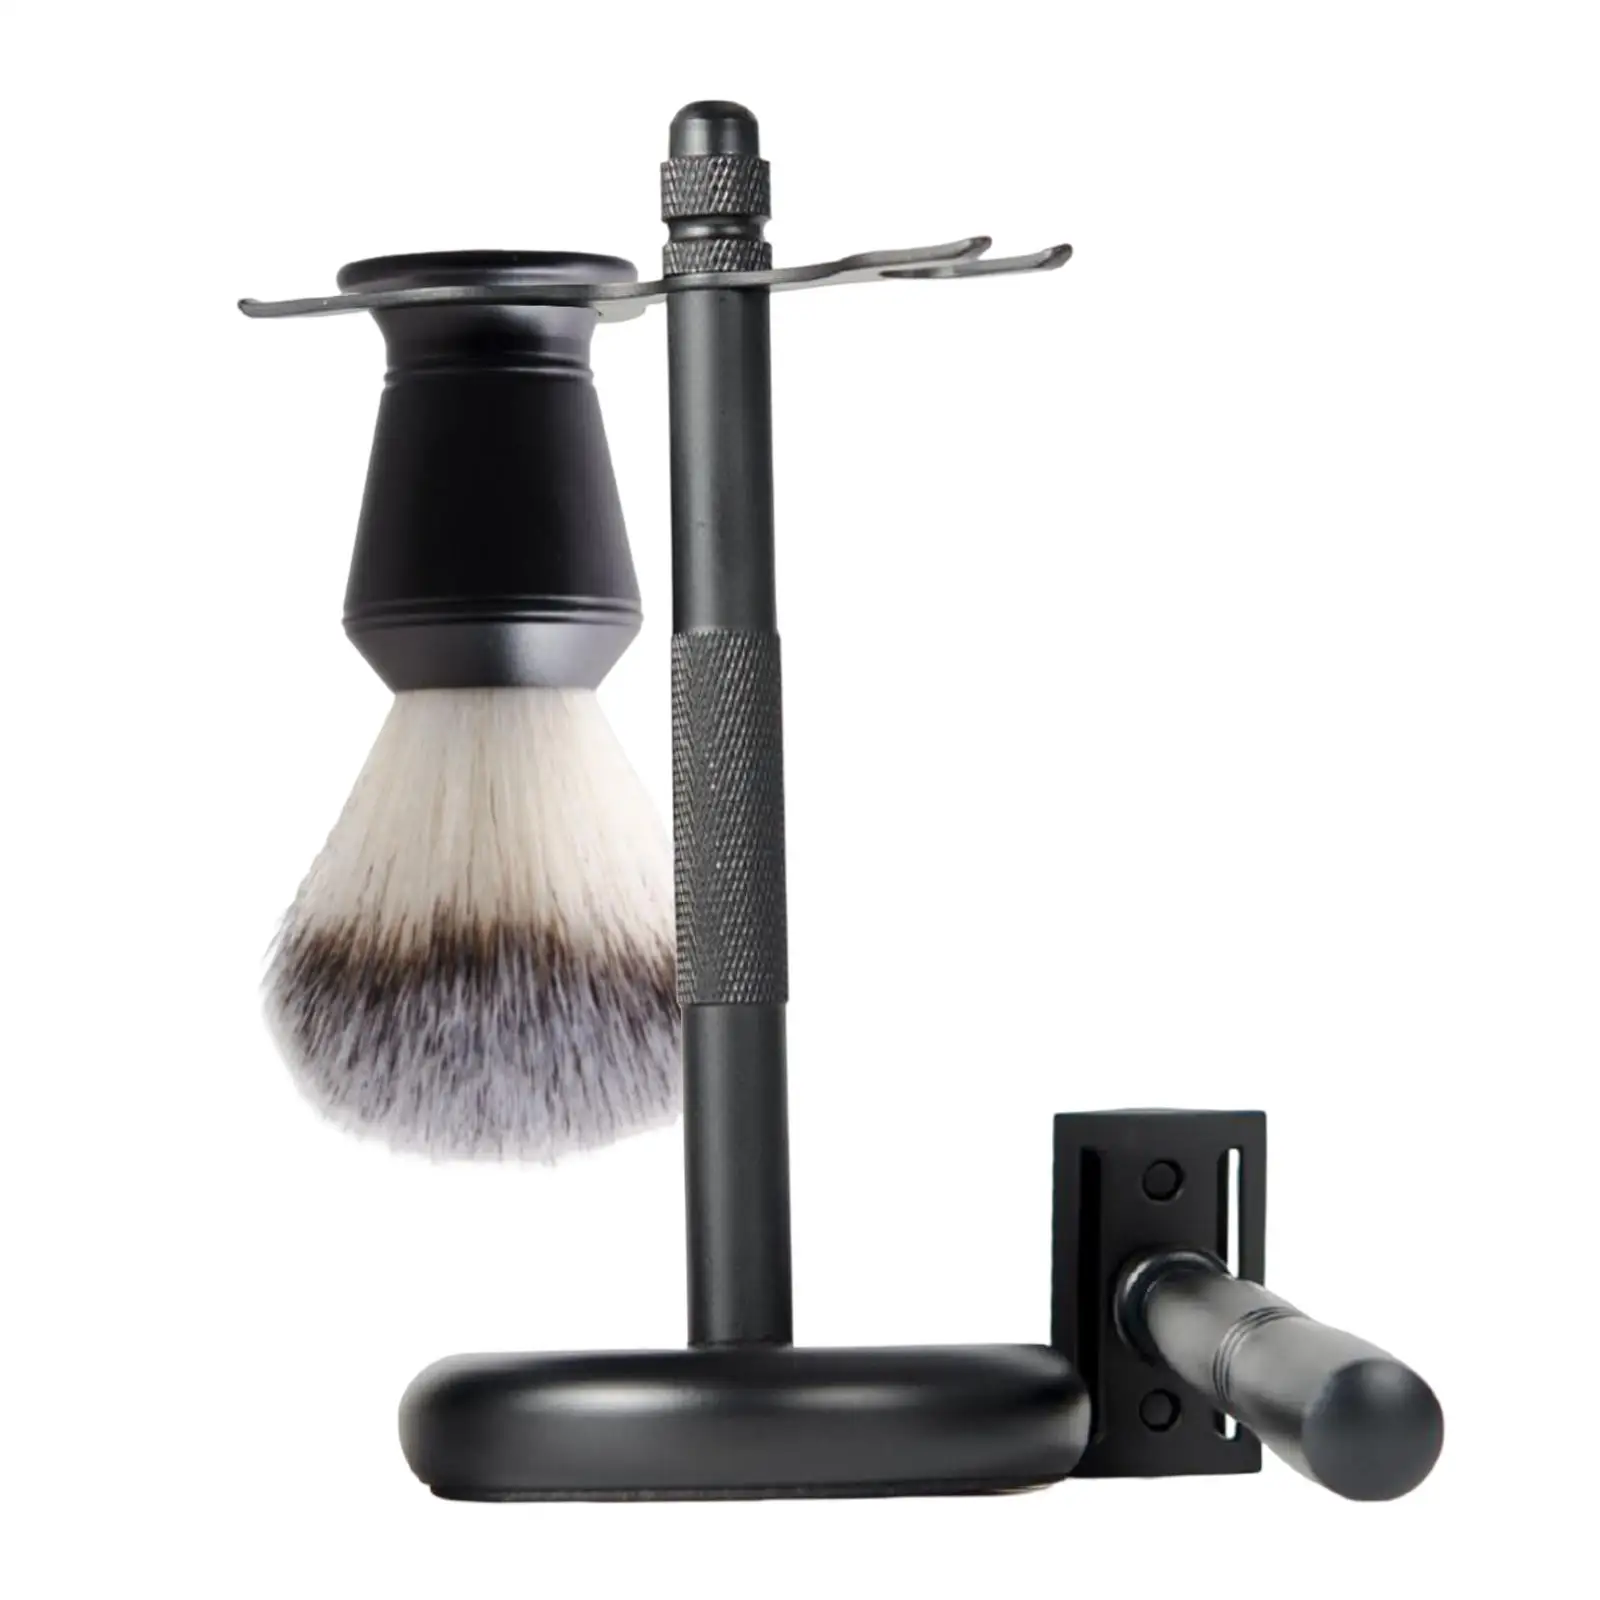 3 Pieces Shaving Set Black Color Razor Shaving Kit Includes Edge Razor, Holder, Shaving Brush Gift Set Luxury for Dad Boyfriend